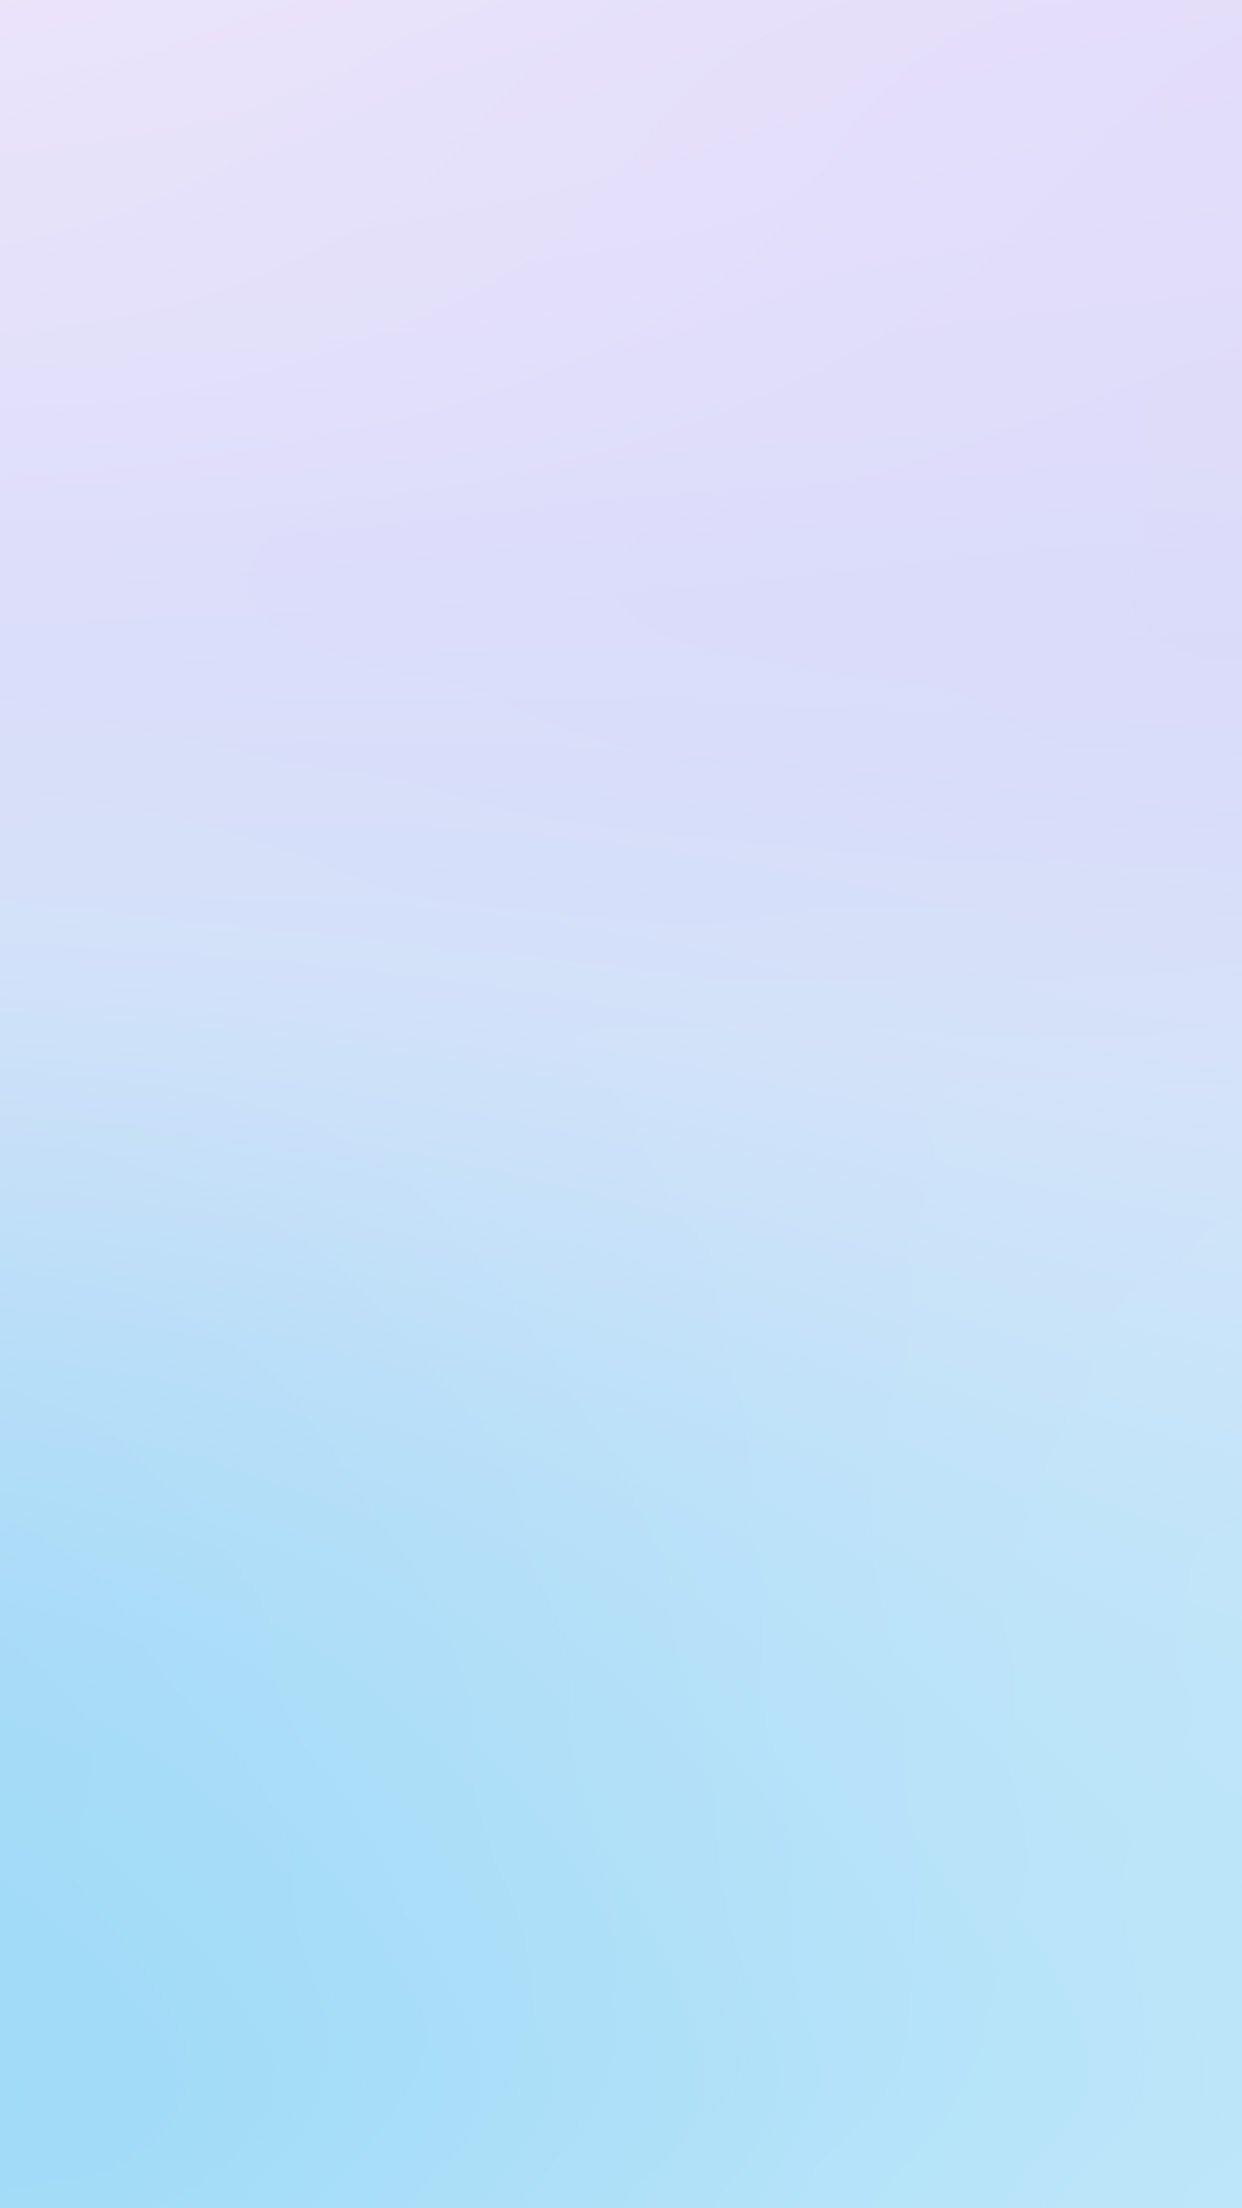 iPhone7 wallpaper. cute blue blur gradation